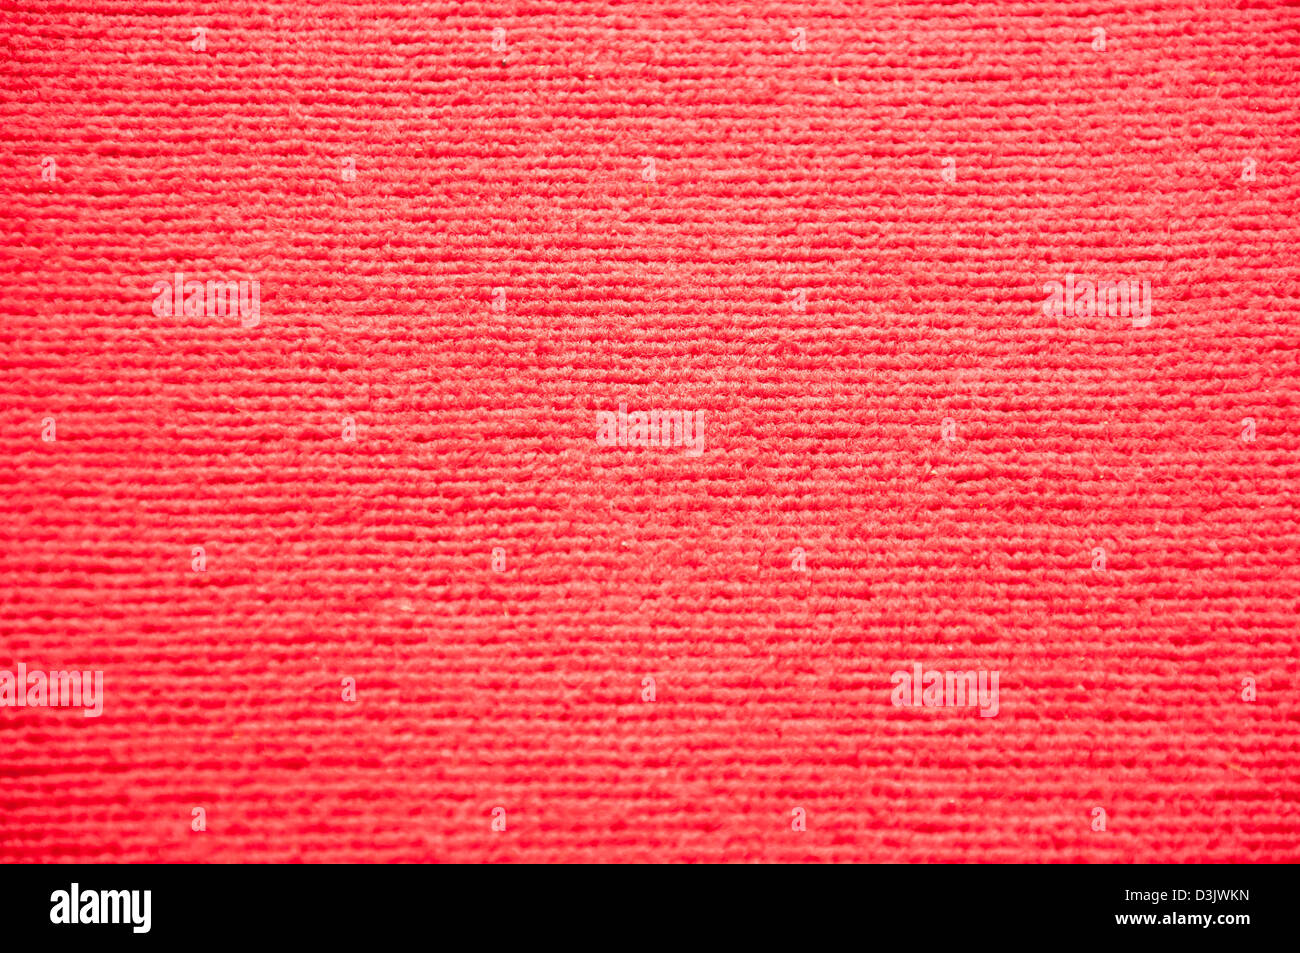 Tapis rouge texture background Banque D'Images